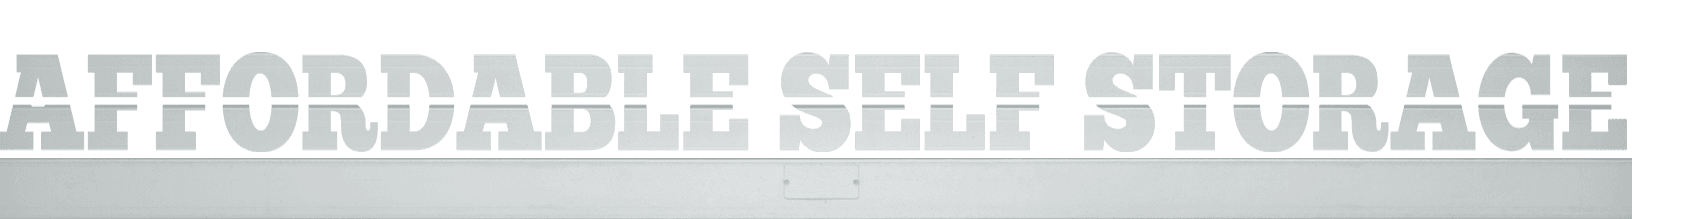 Affordable Self Storage Unit Logo